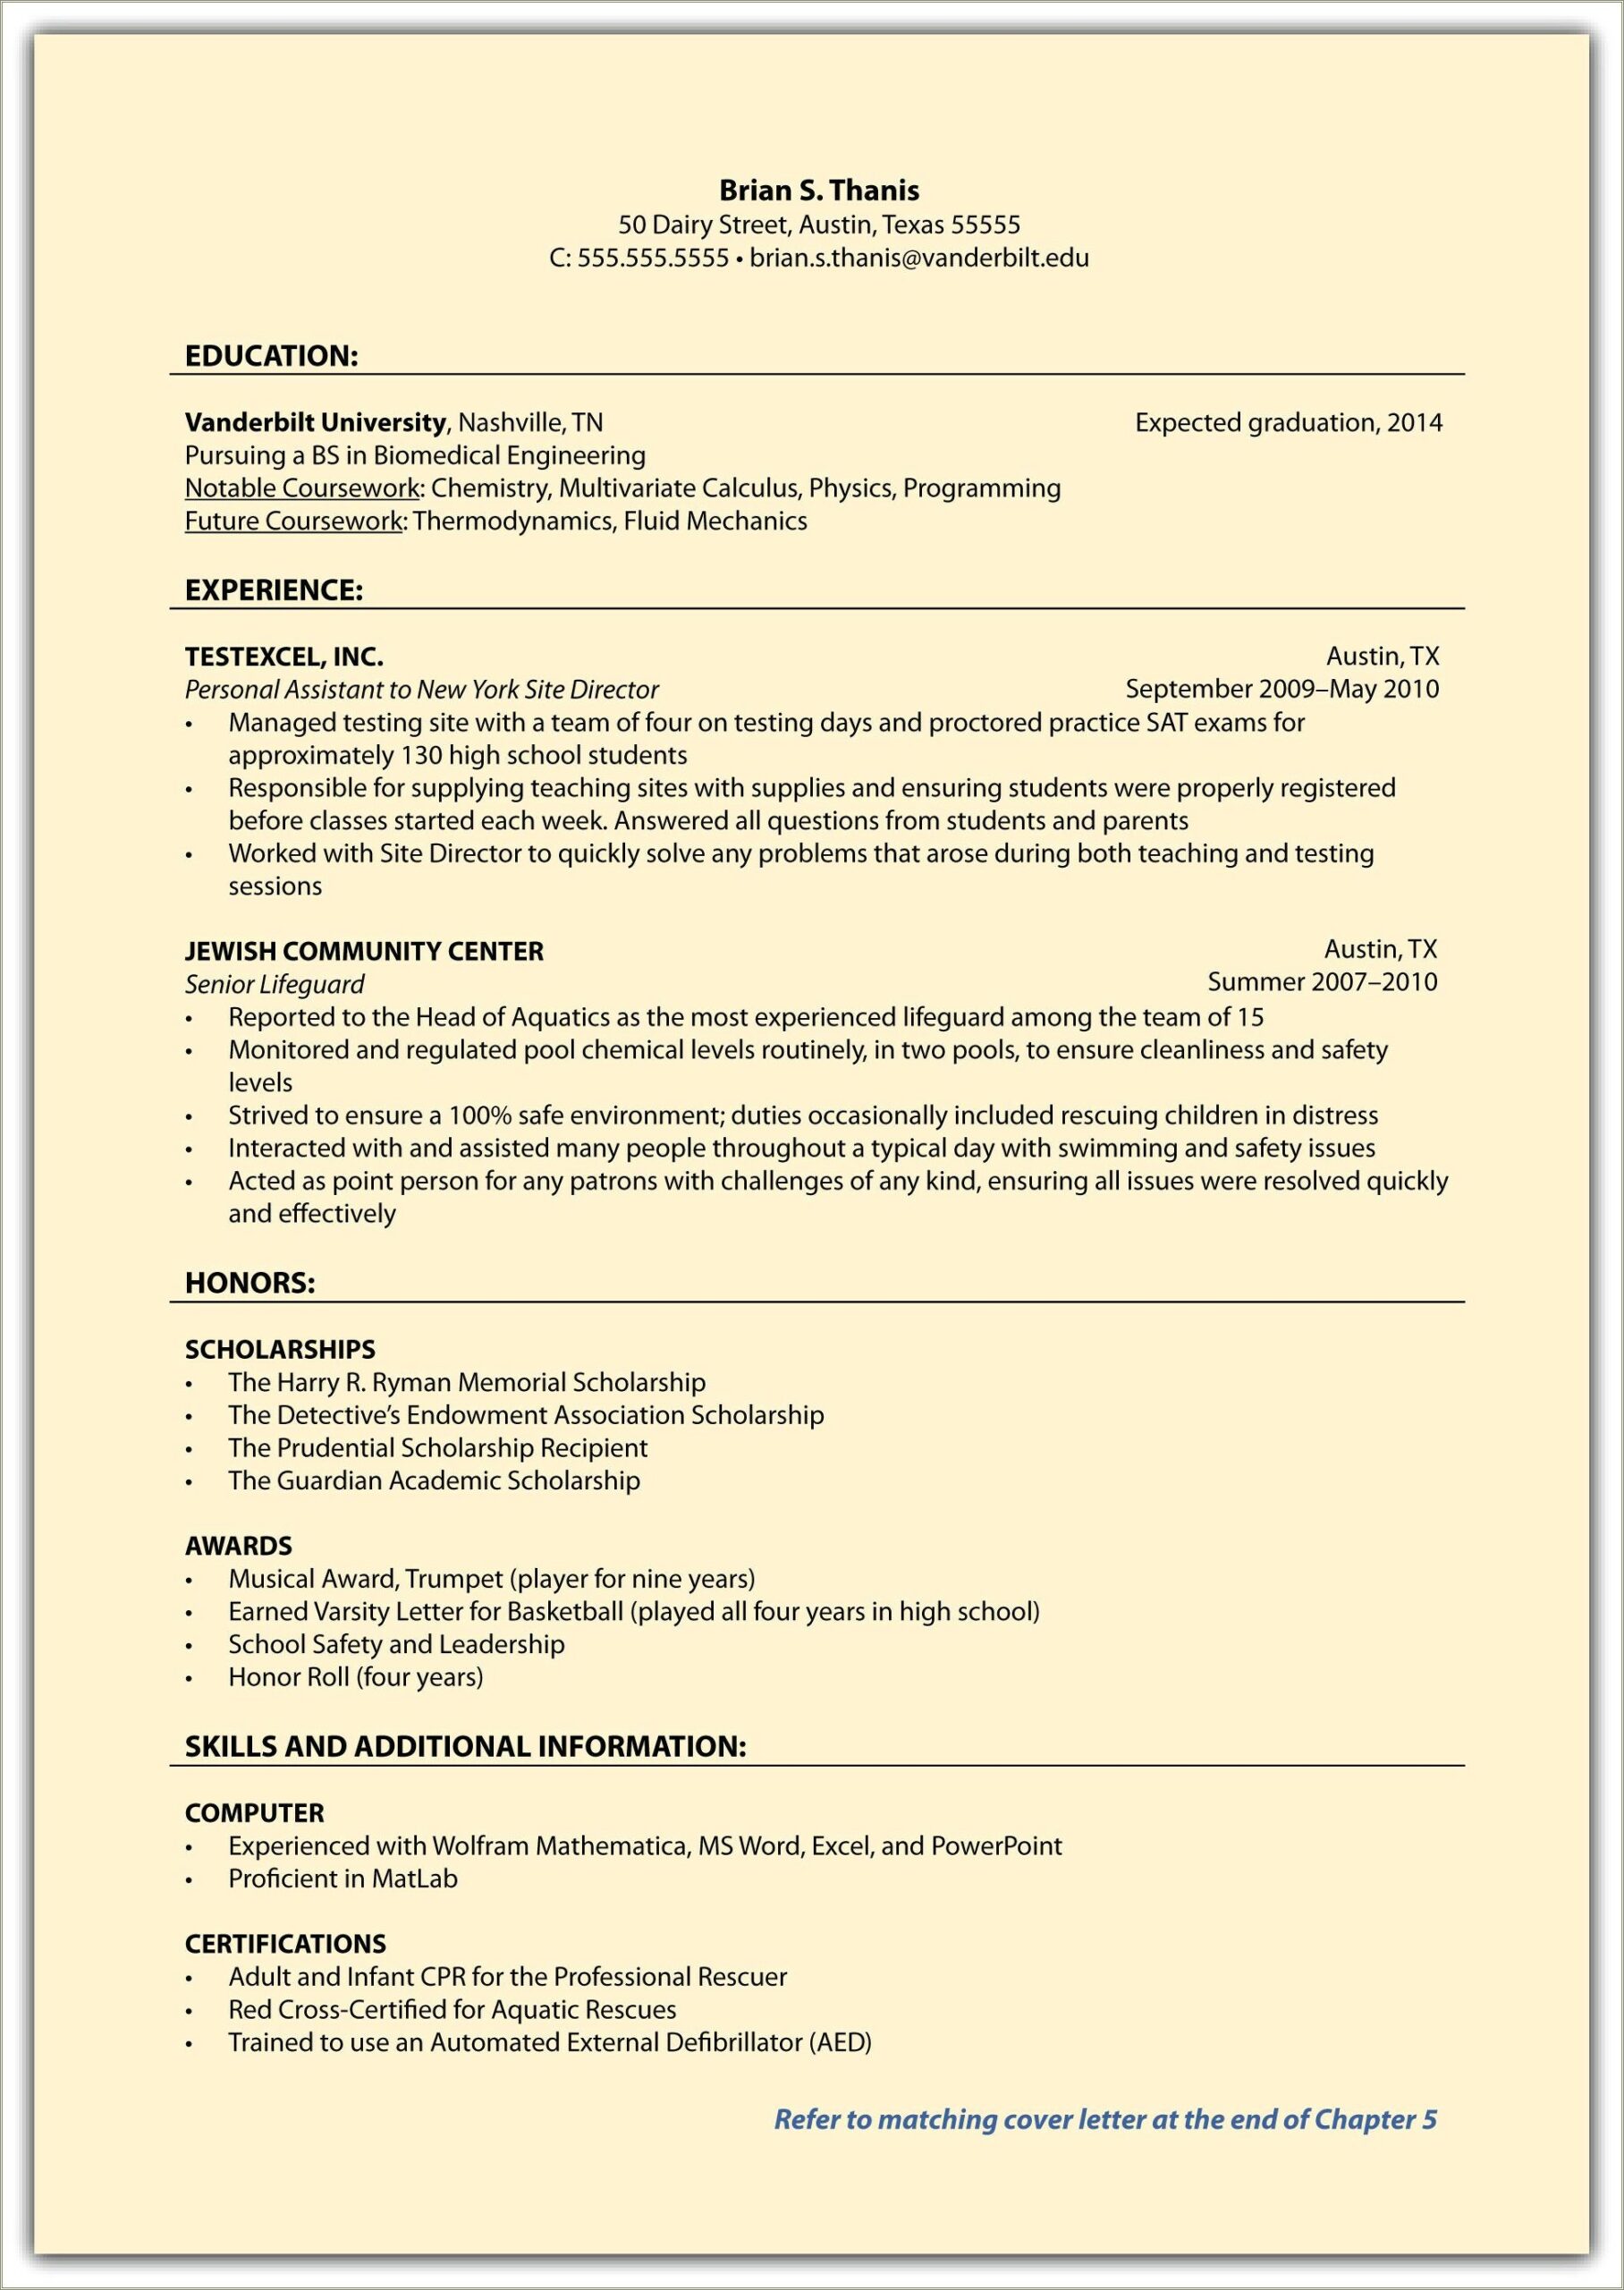 Resume Database Free For Recruiters India